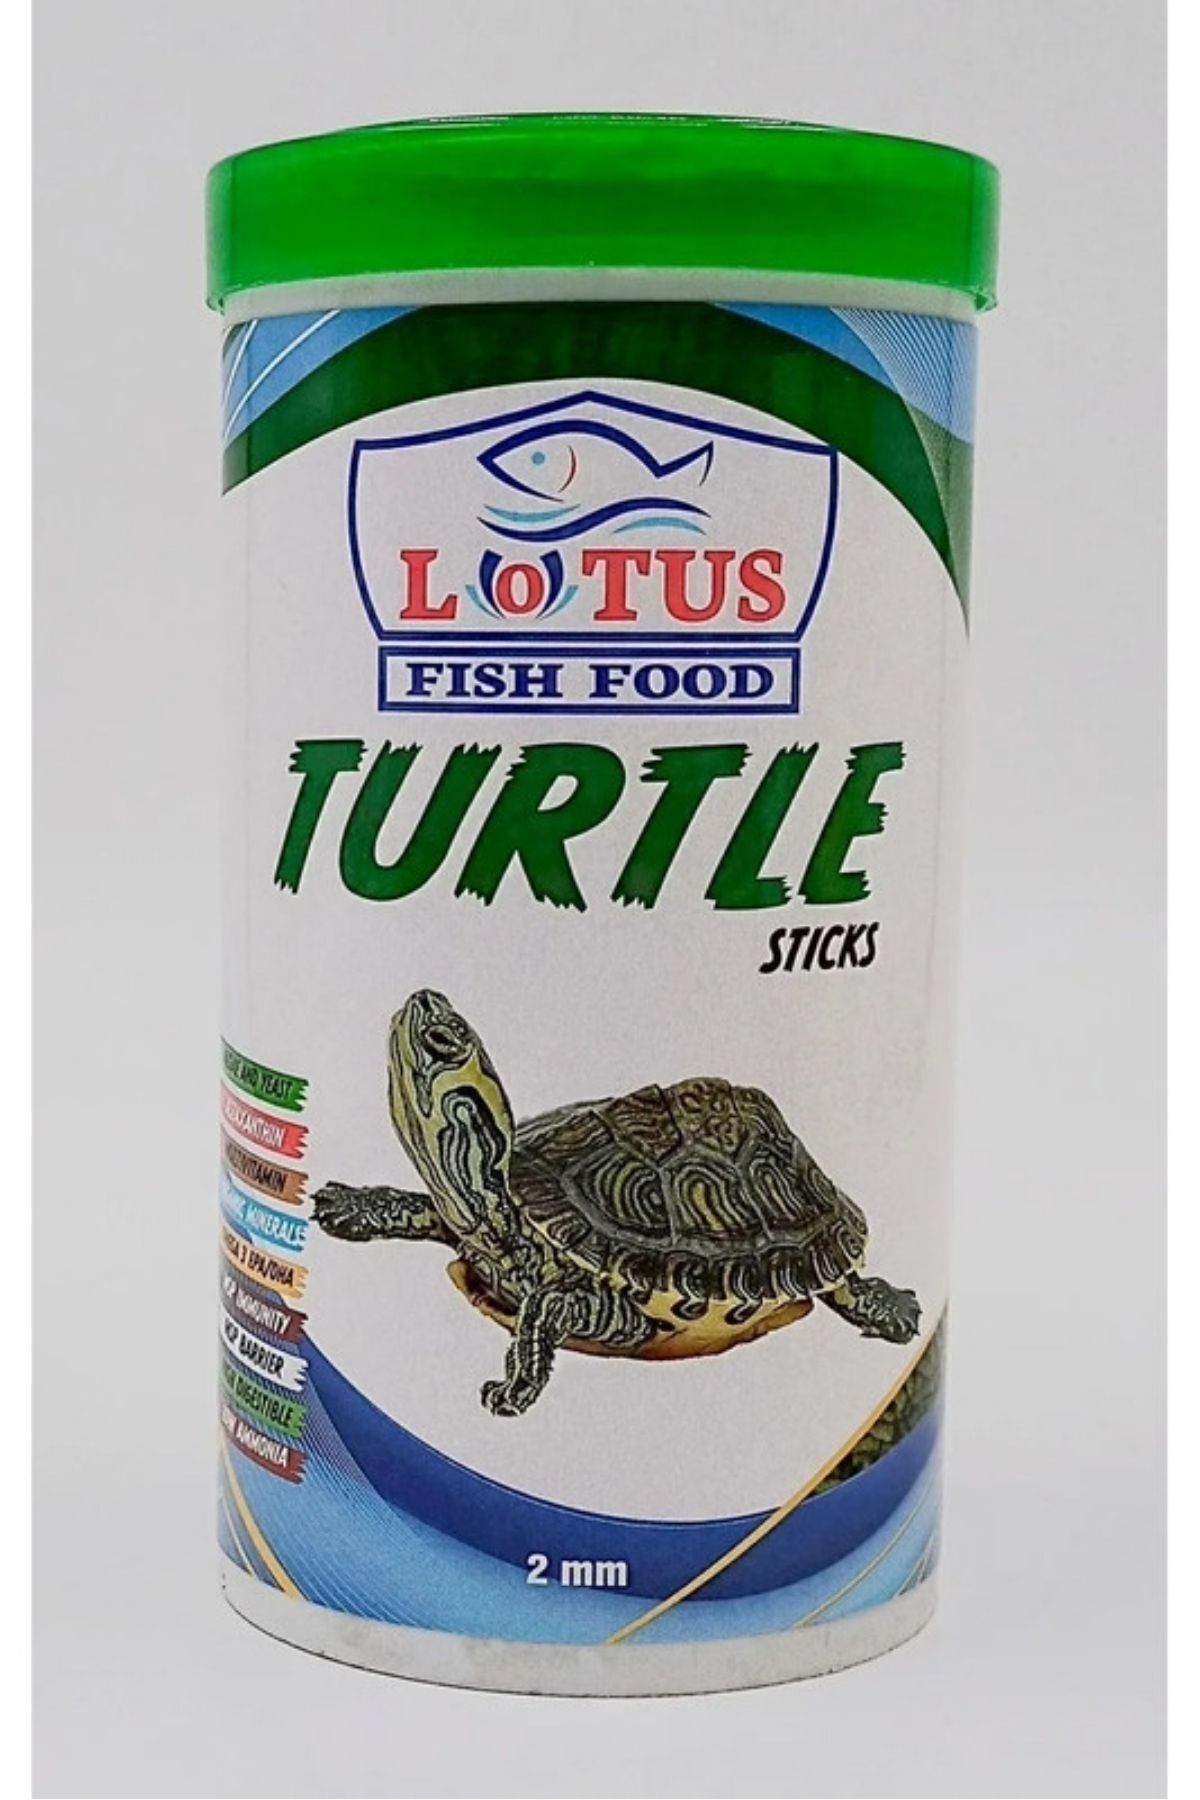 Lotus Turtle Sticks kaplumbağa yemi 100 ml